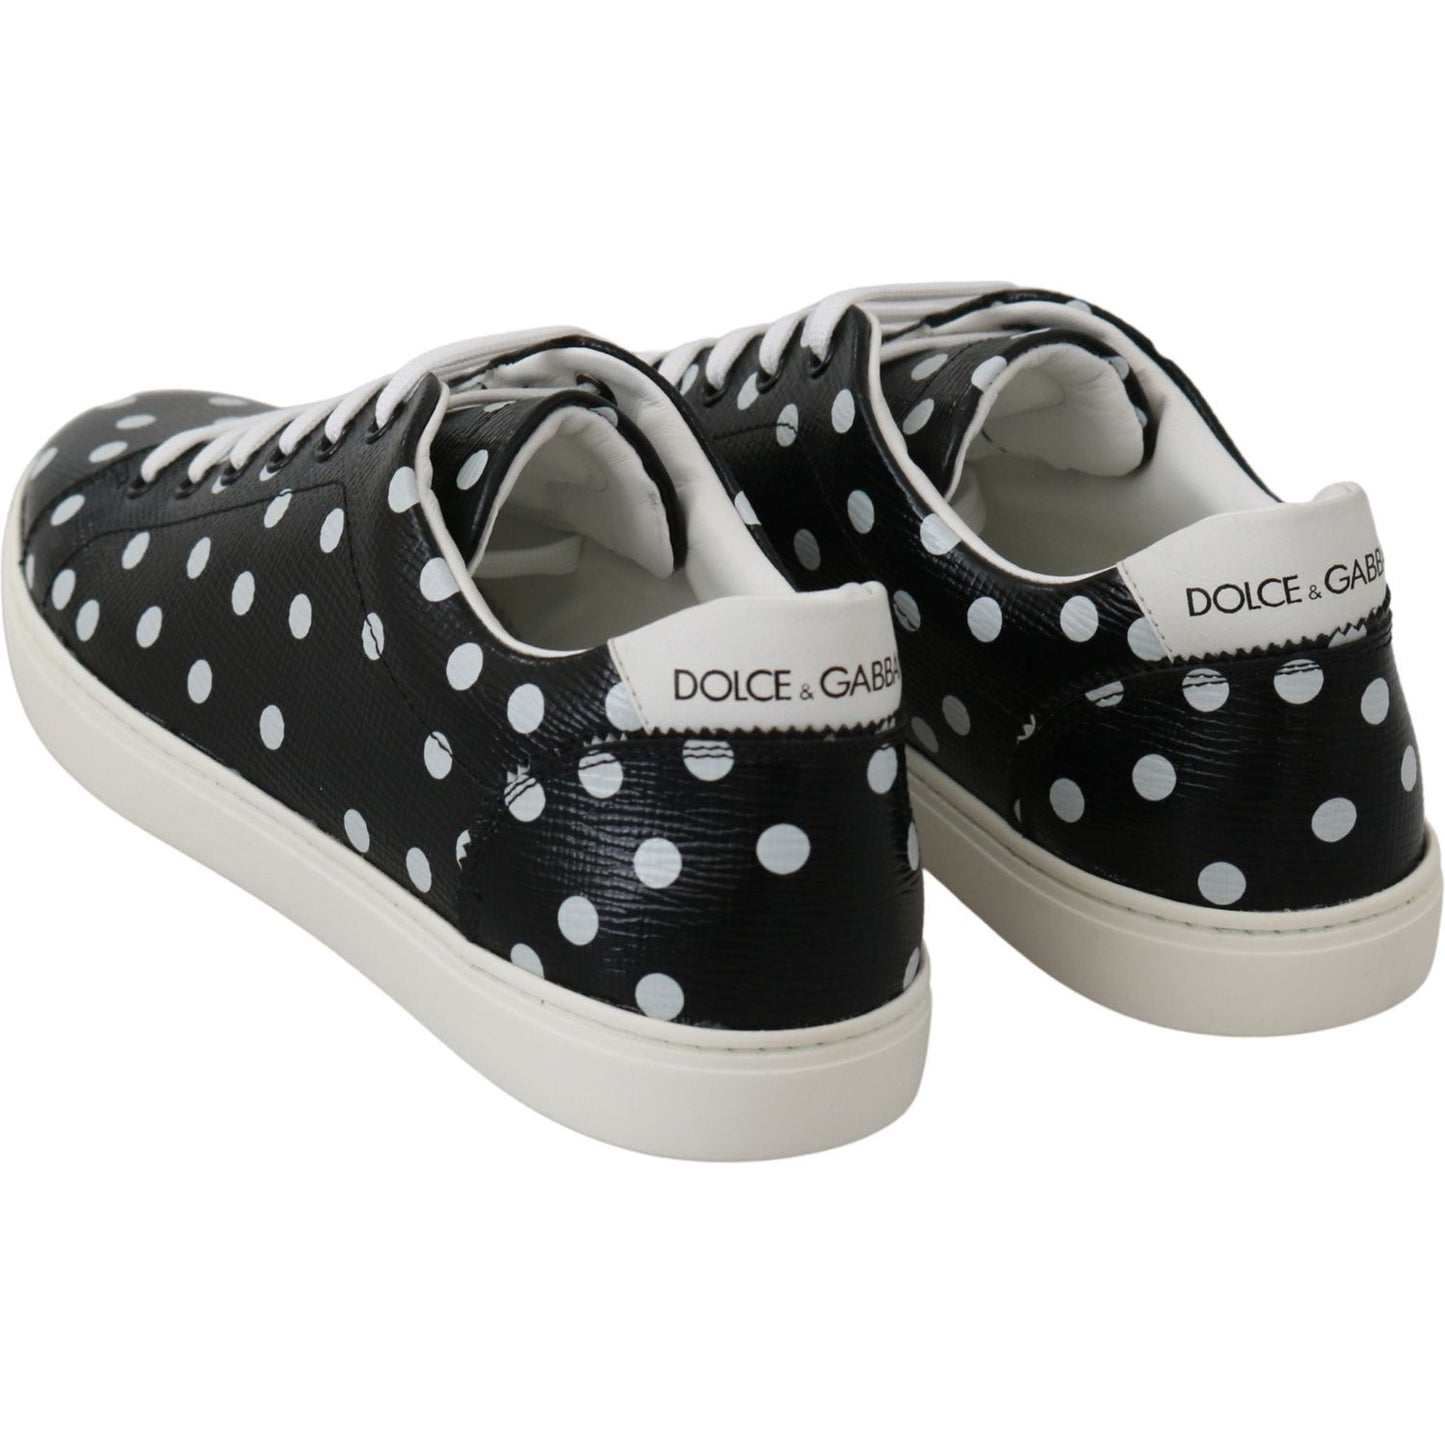 Dolce & GabbanaBlack Polka Dotted Leather SneakersMcRichard Designer Brands£509.00